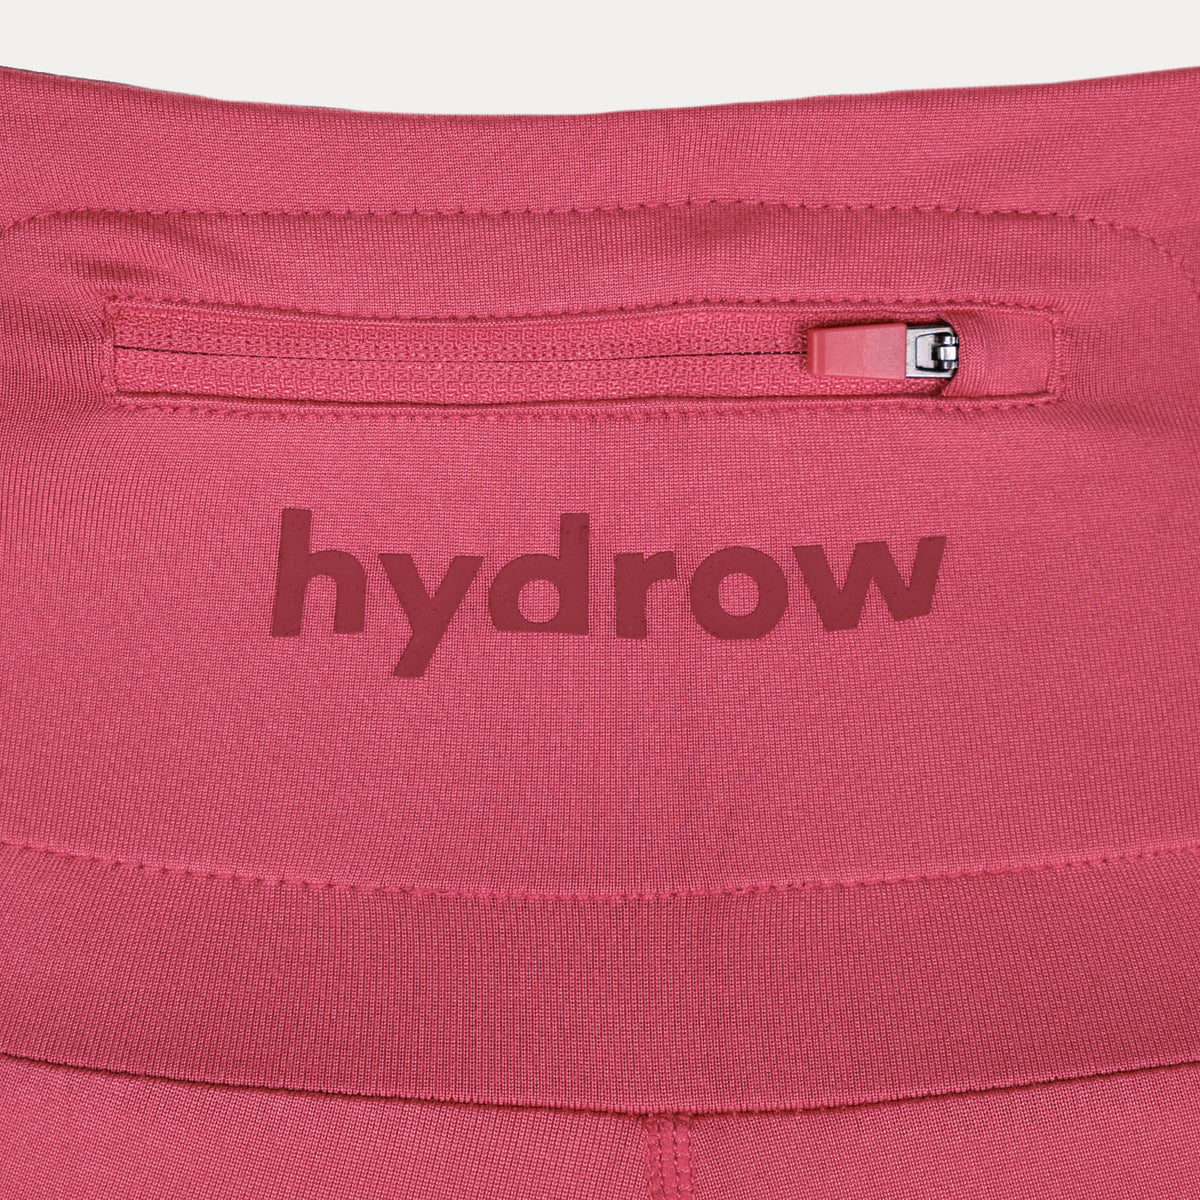 detail photo of rear zip[per pocket near waistband. hydrow logo shown.